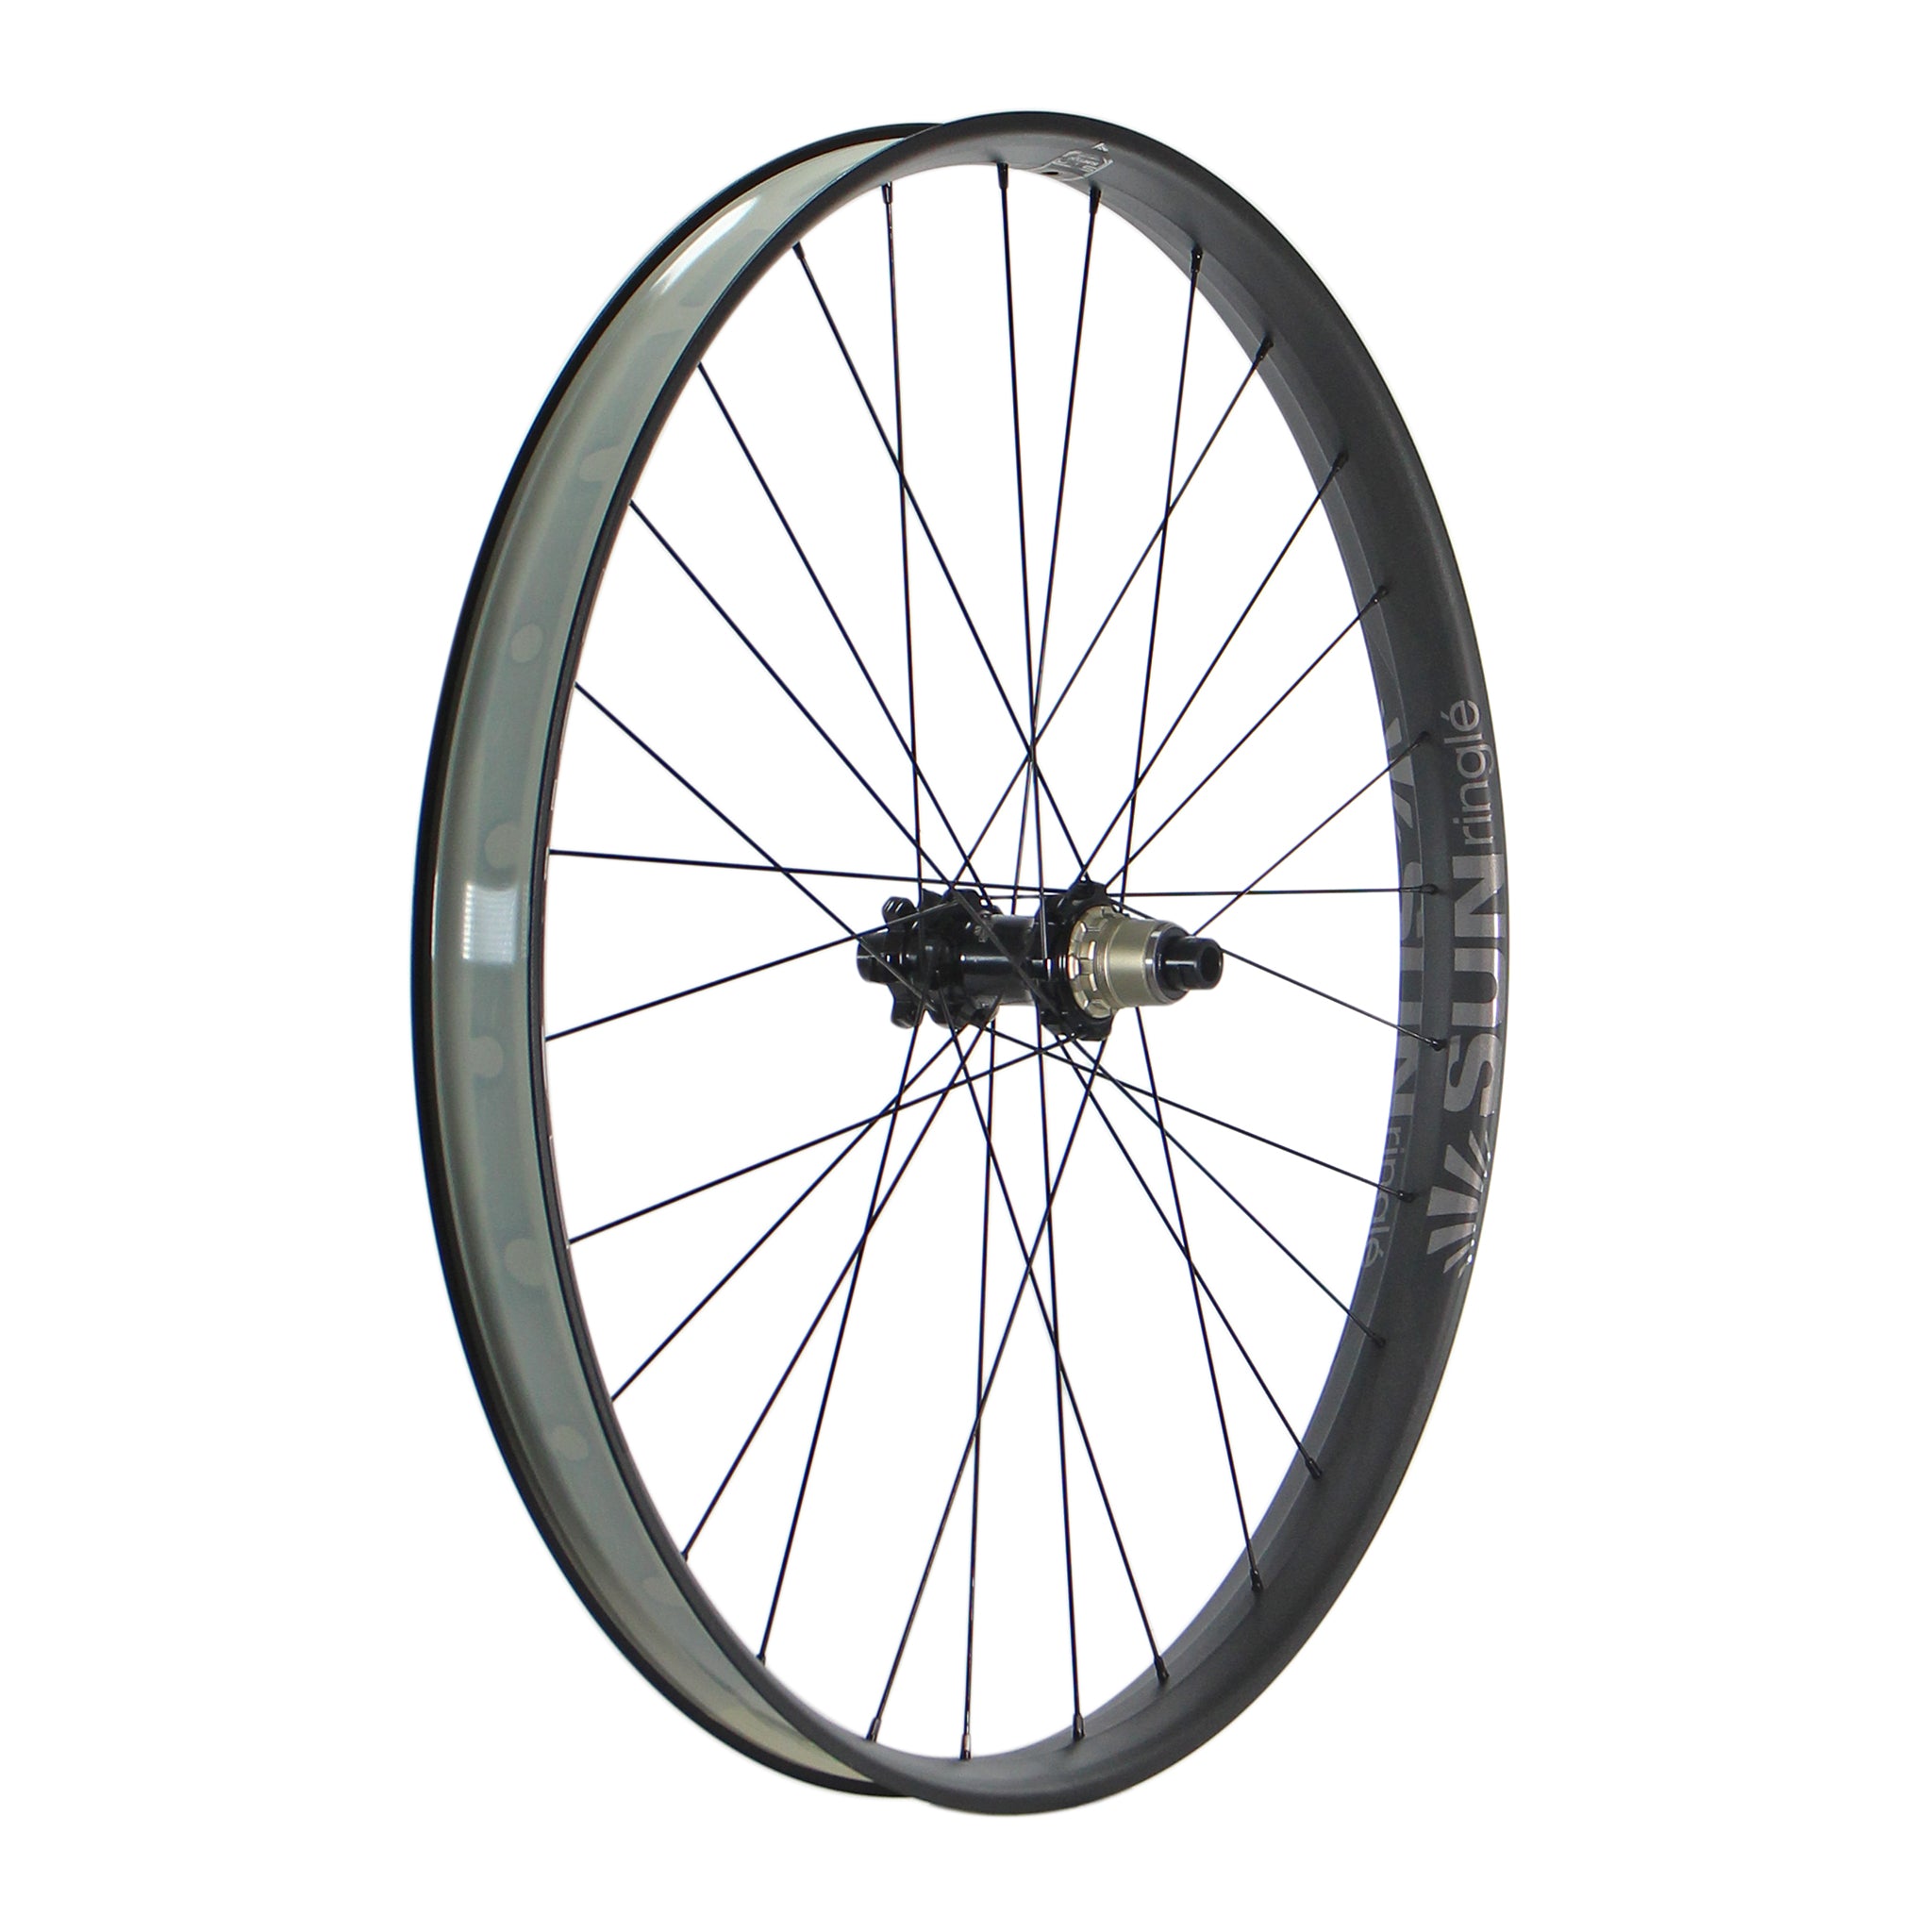 SunRingle Duroc 50 Expert 27.5" Rear Wheel (XD/MS) 148x12 Blk